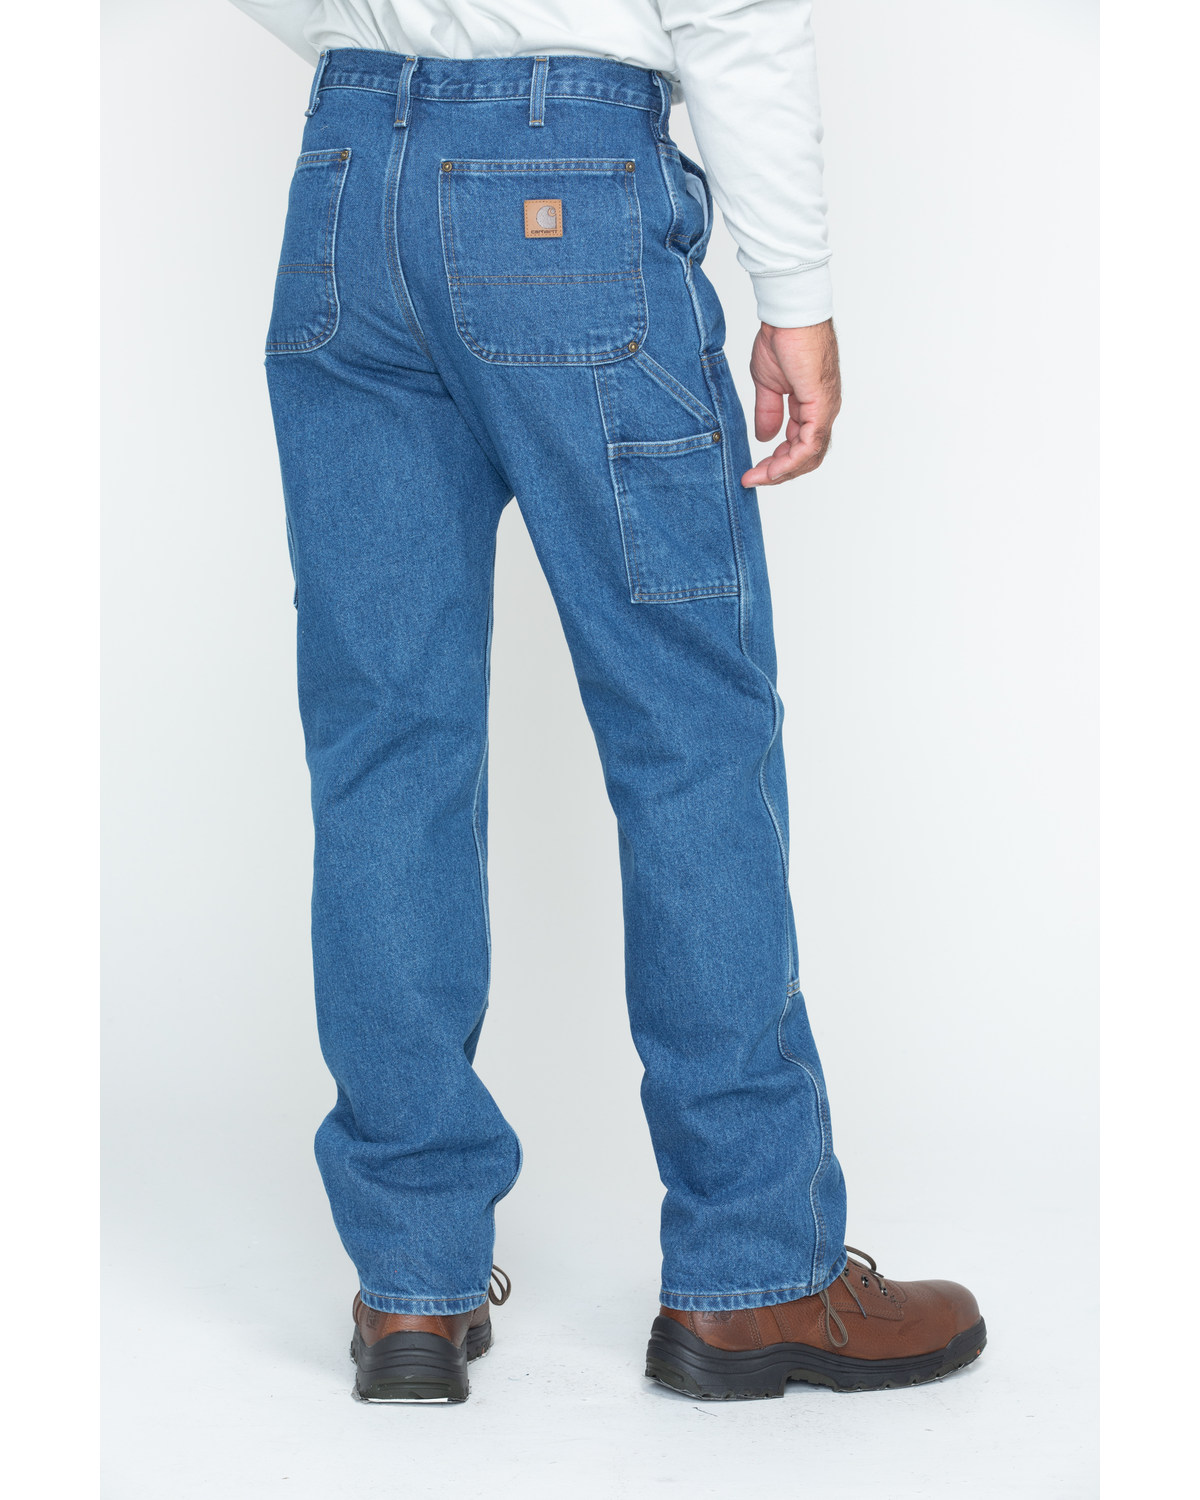 logger jeans